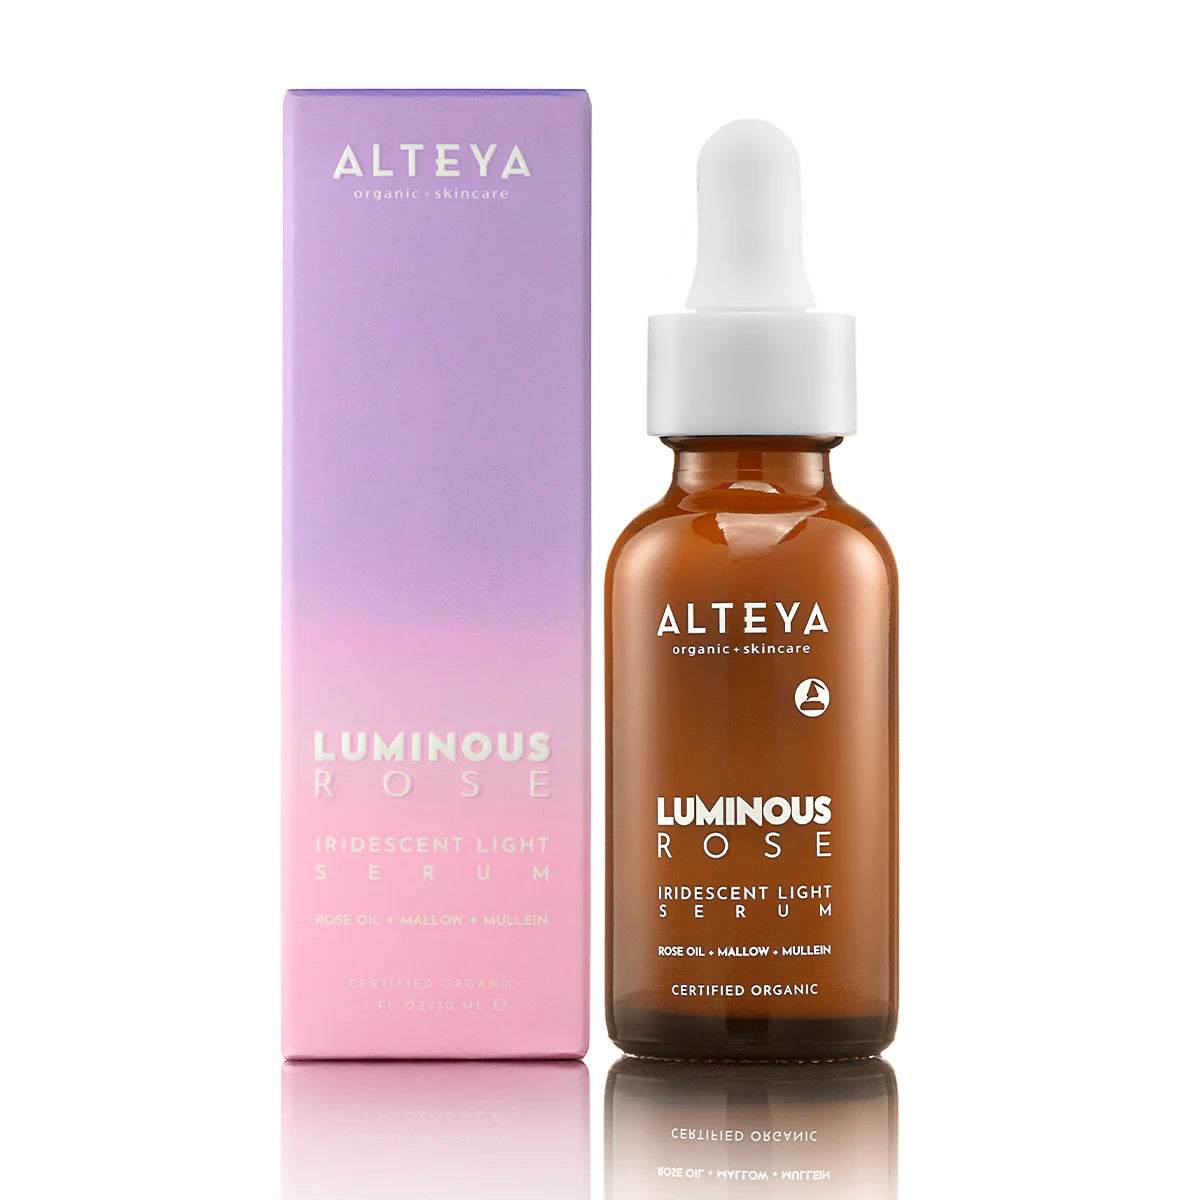 Iridescent Light Serum Luminous Rose 30ml. This moisturizing serum offers intense hydration for the skin.